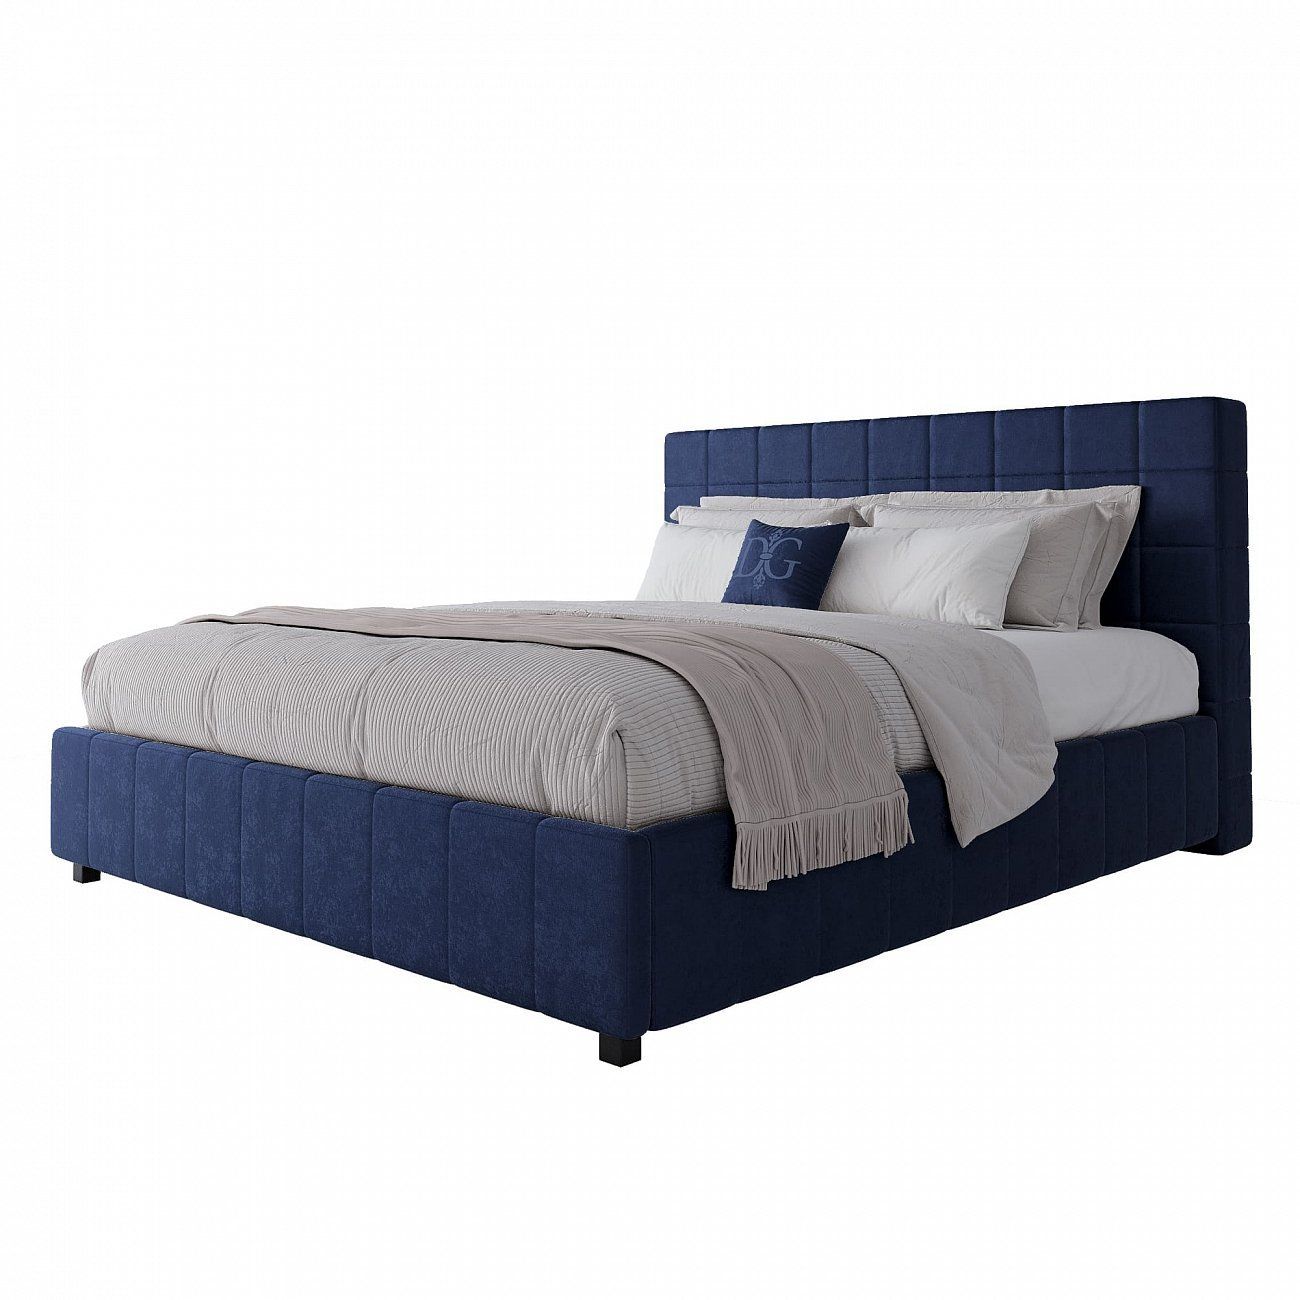 Double bed 180x200 cm blue Shining Modern